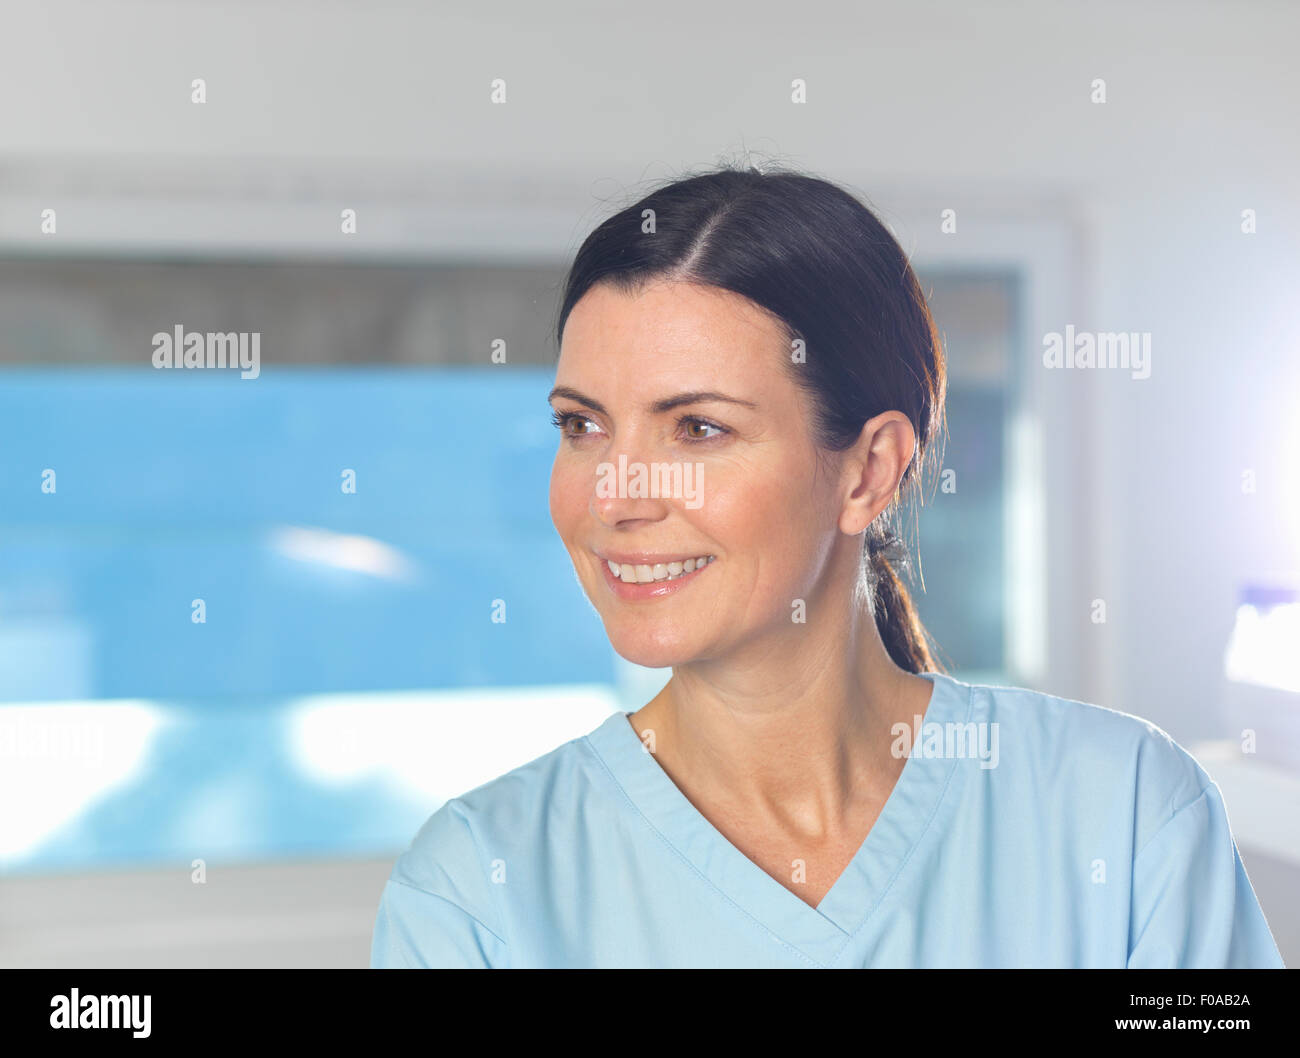 Health worker at work, window in background. Stock Photo